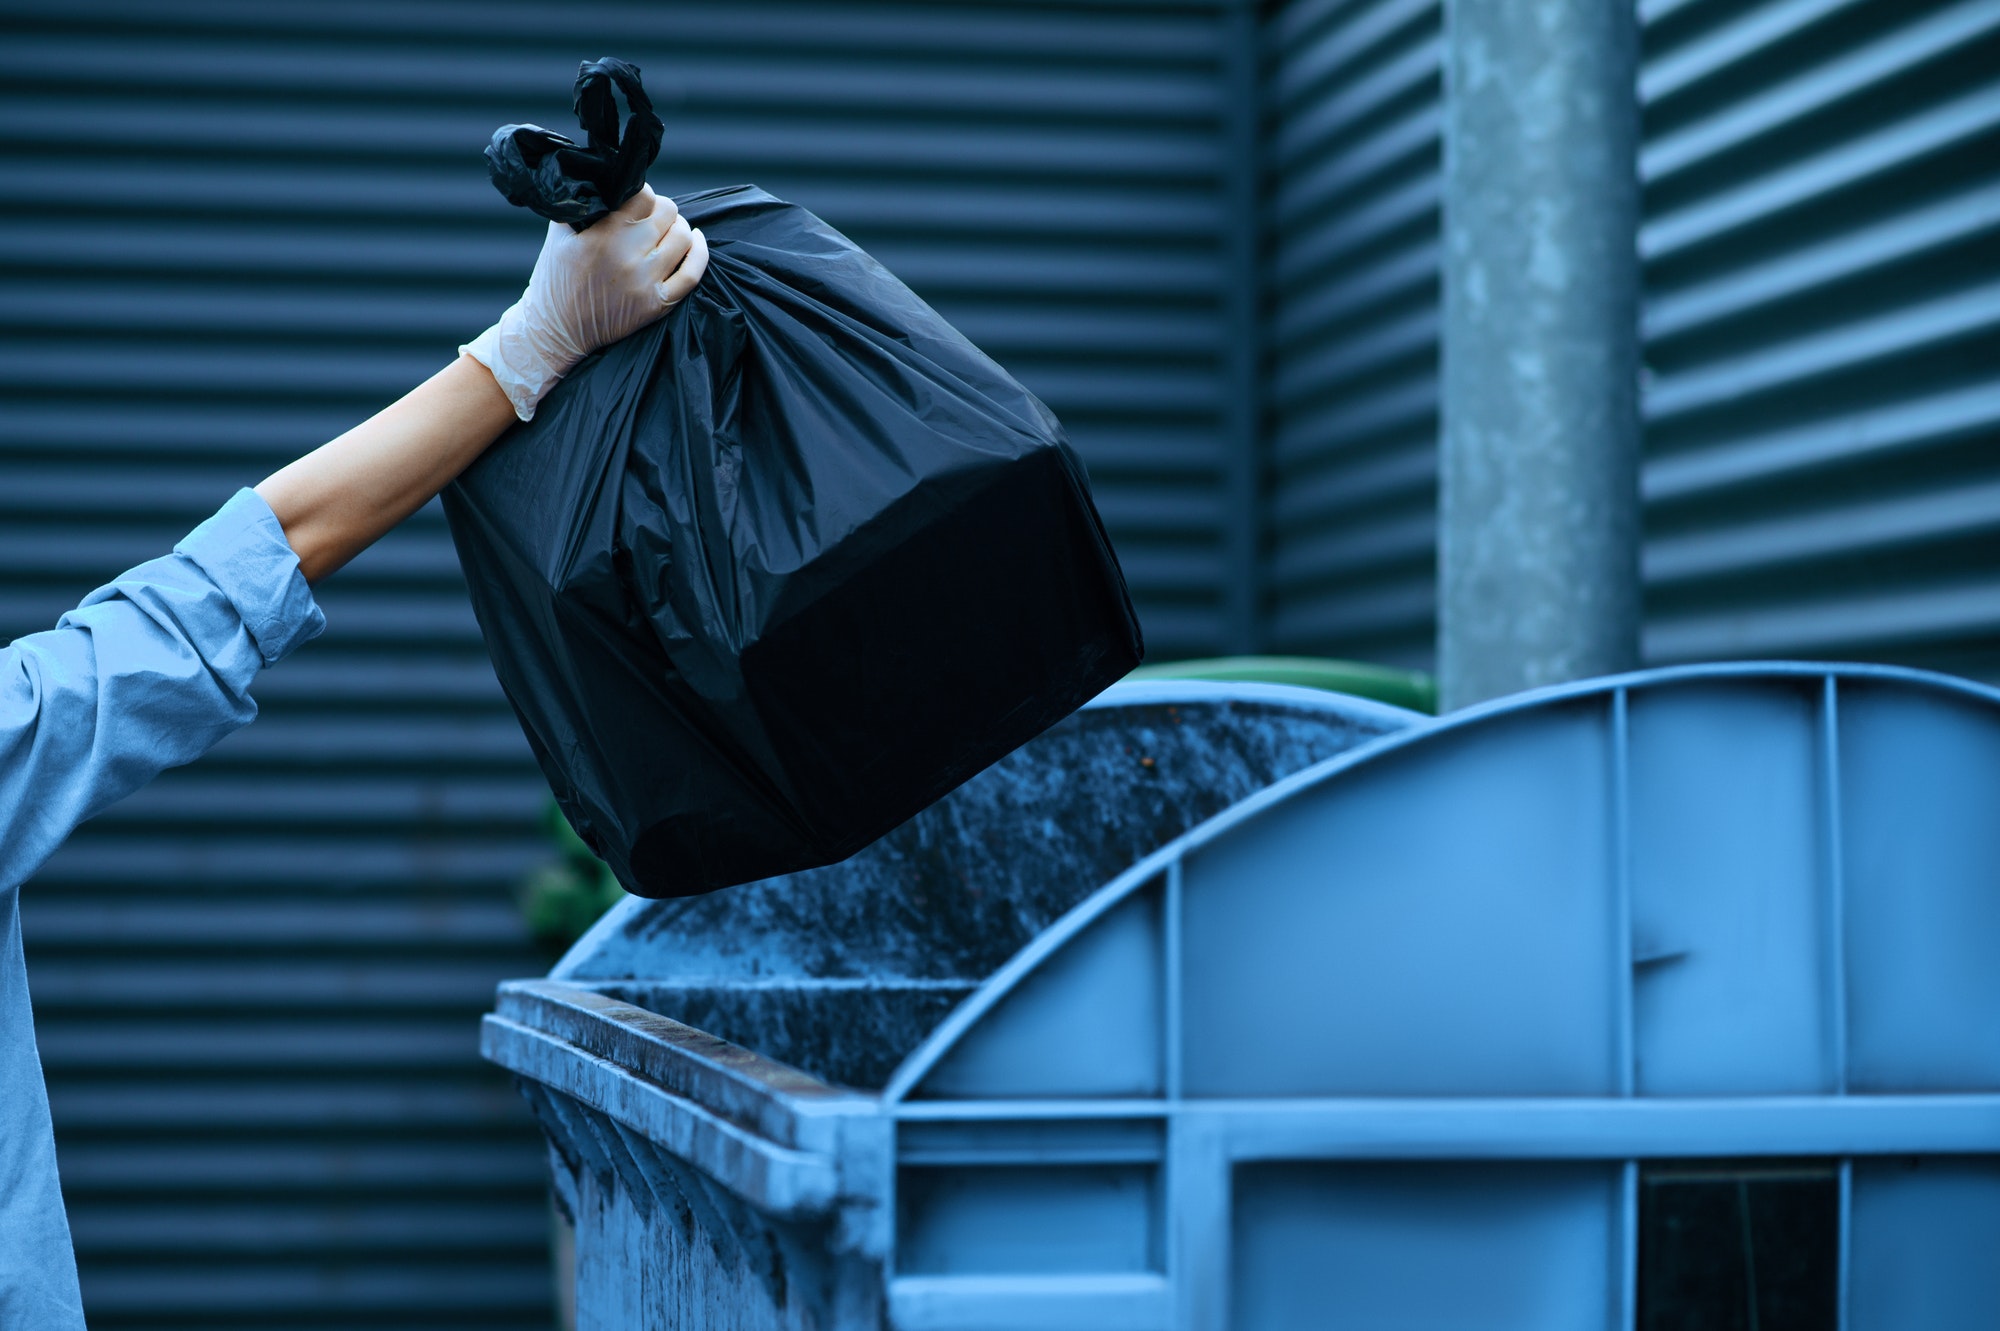 Volunteer puts plastic trash bag into the bin